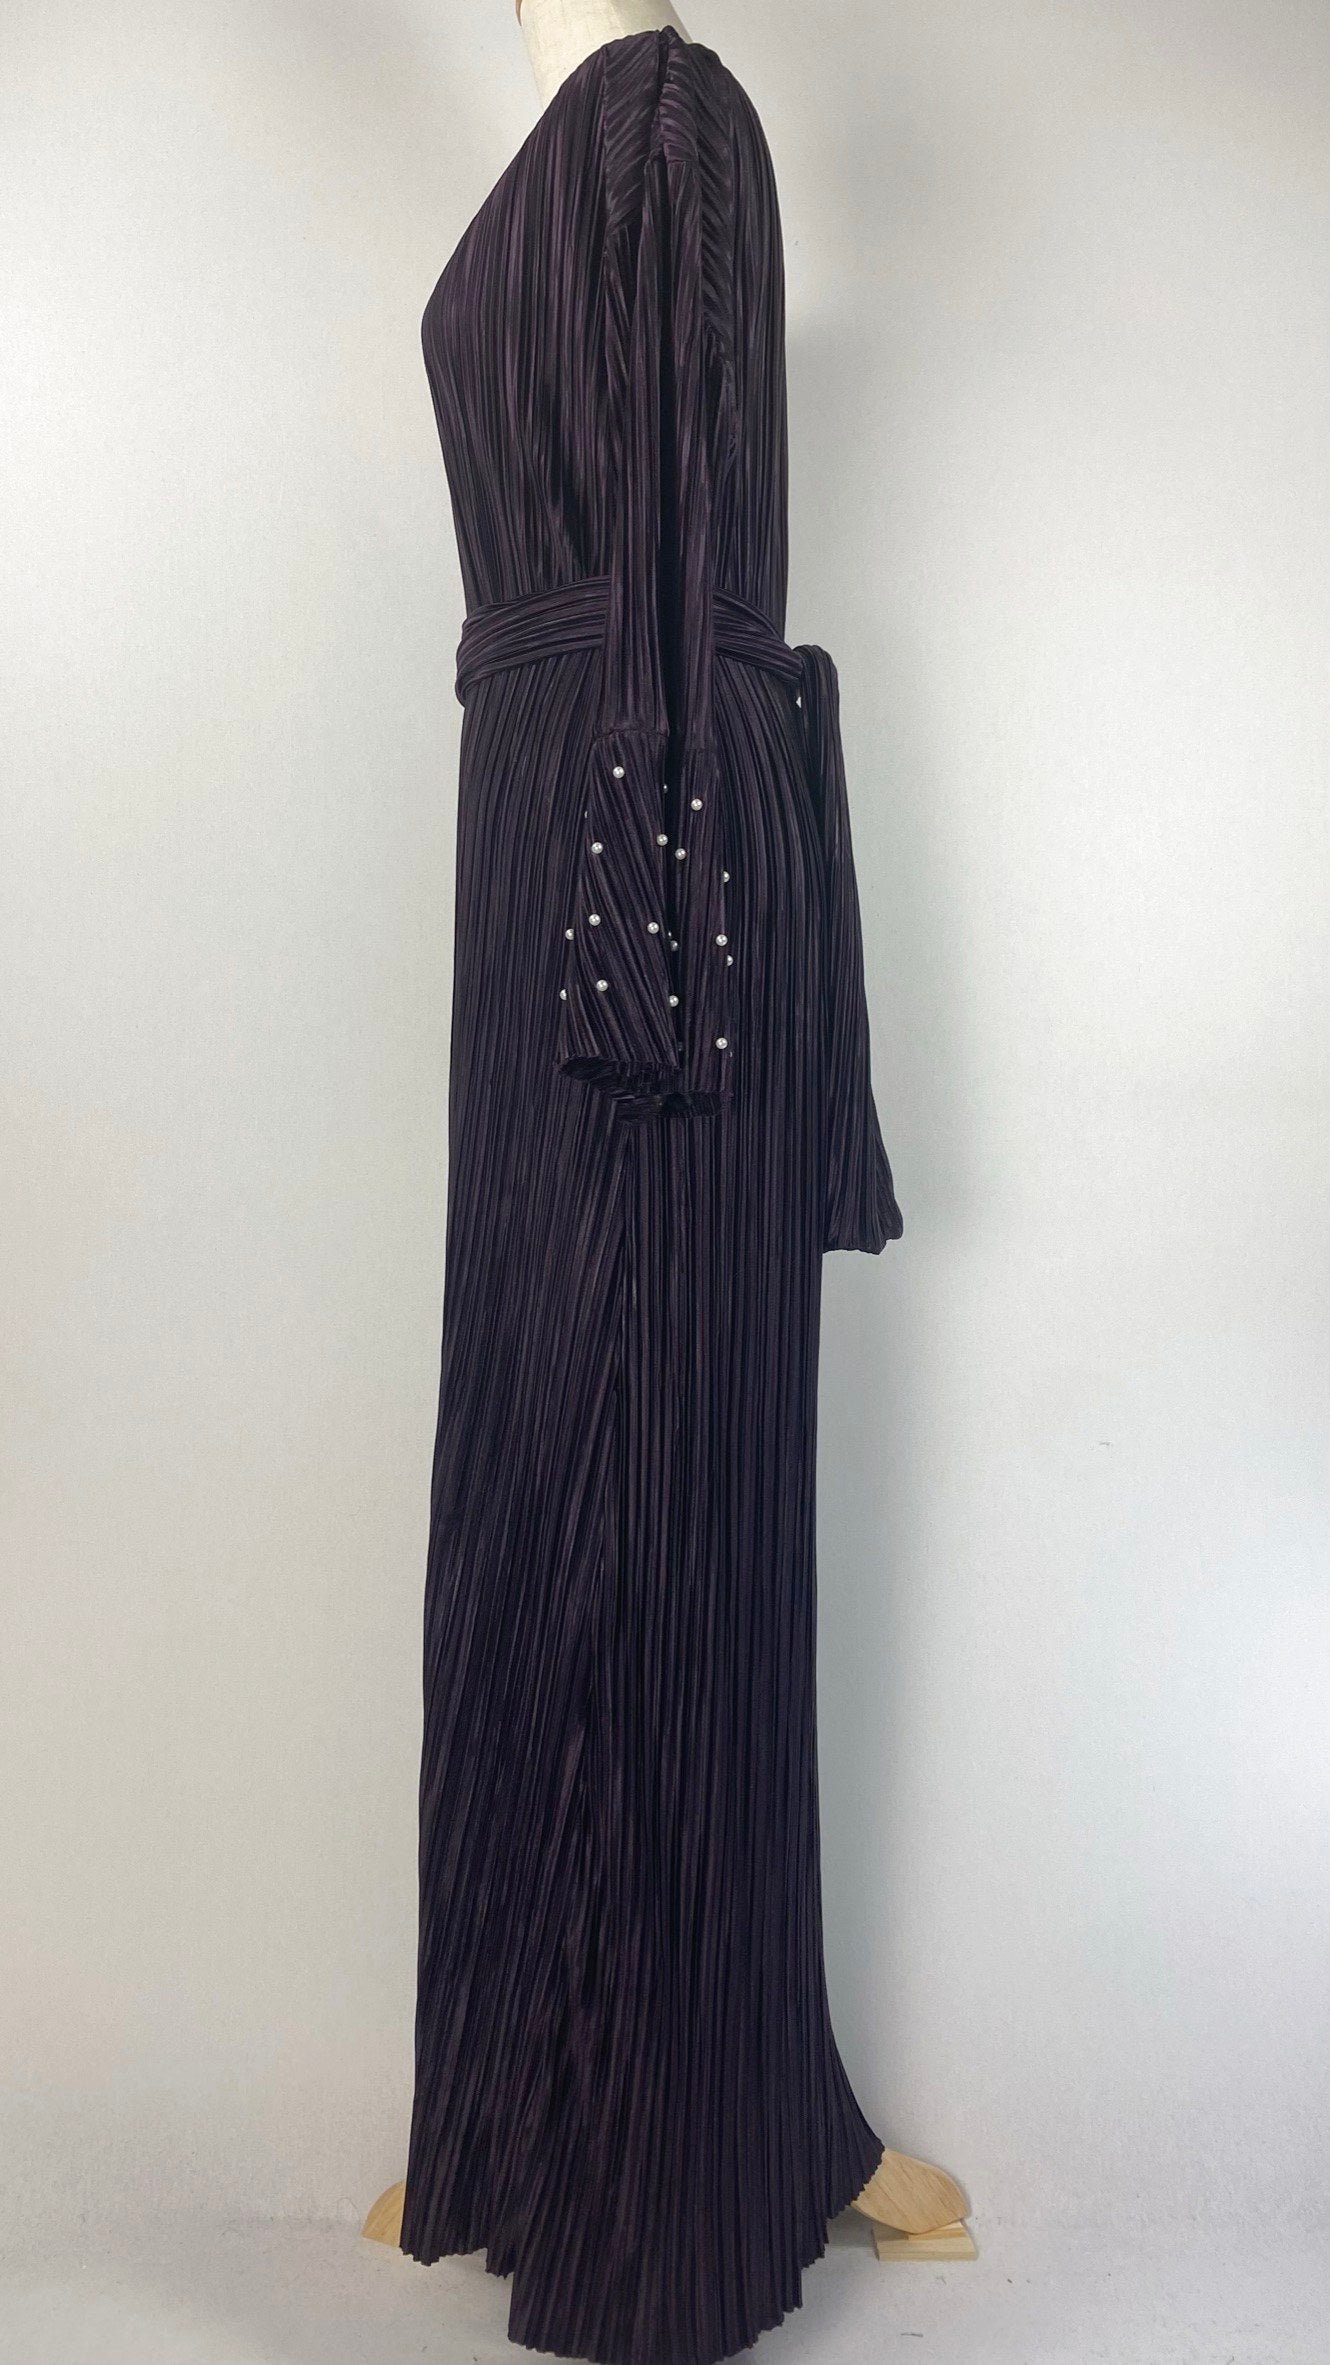 Long Sleeve Pleated Maxi Dress, Purple